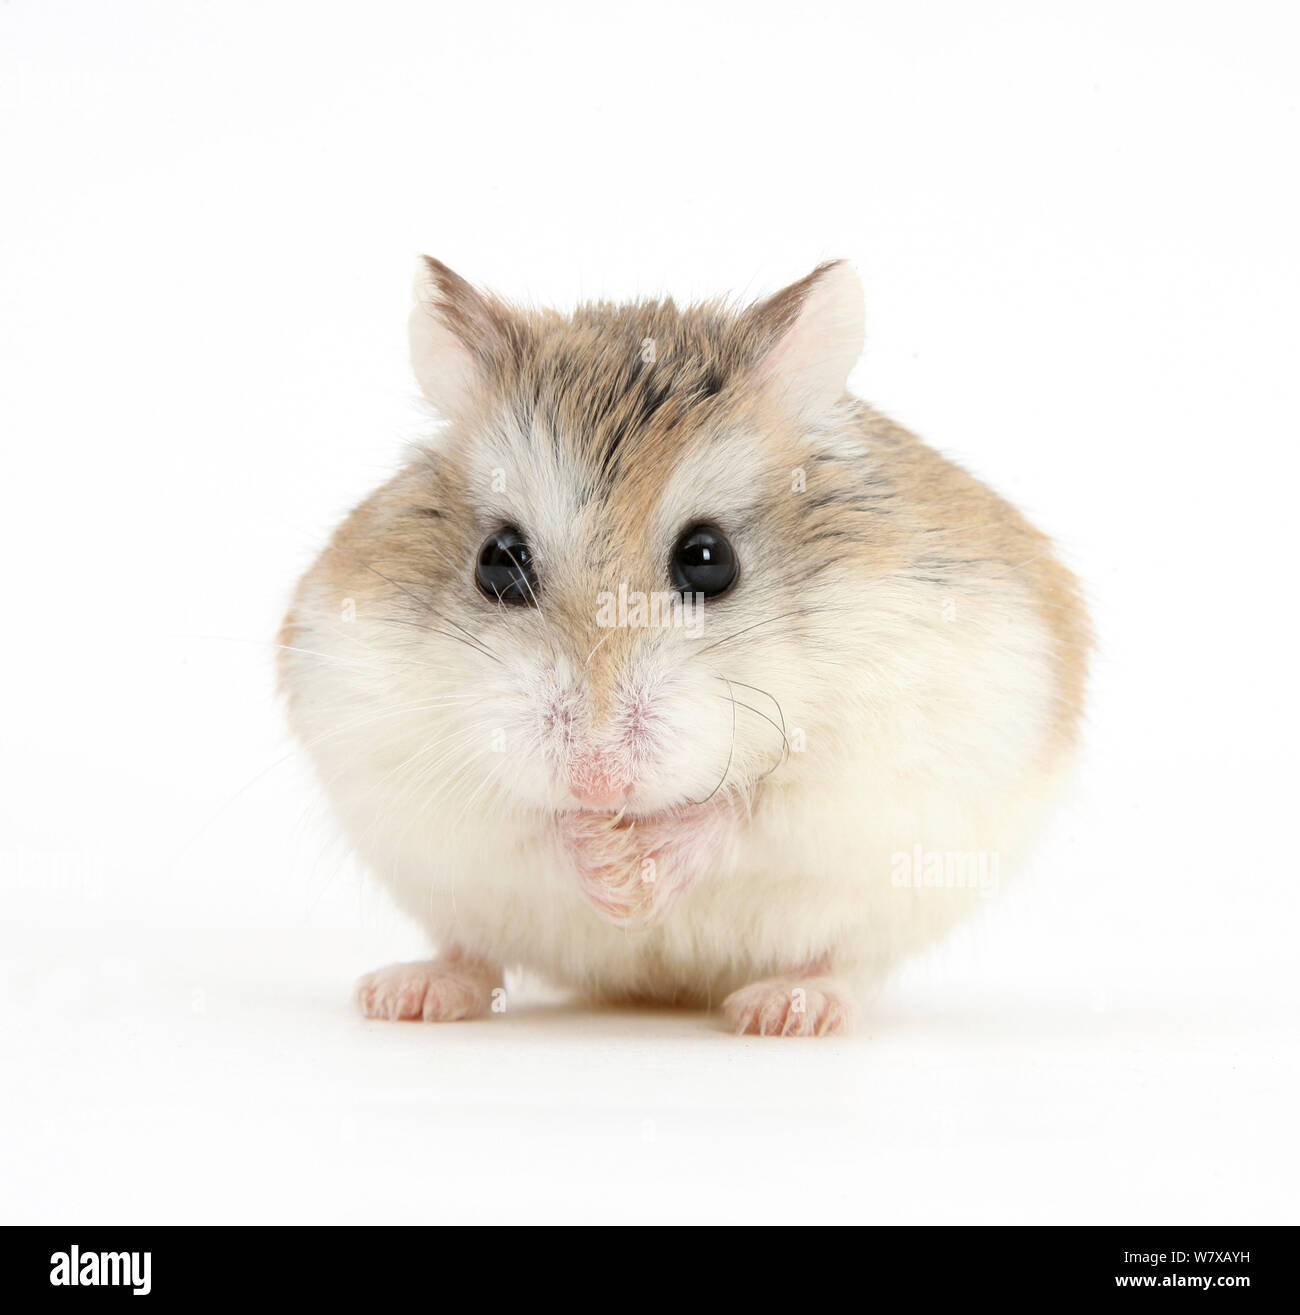 Roborovski Hamster (Phodopus roborovskii) Stock Photo